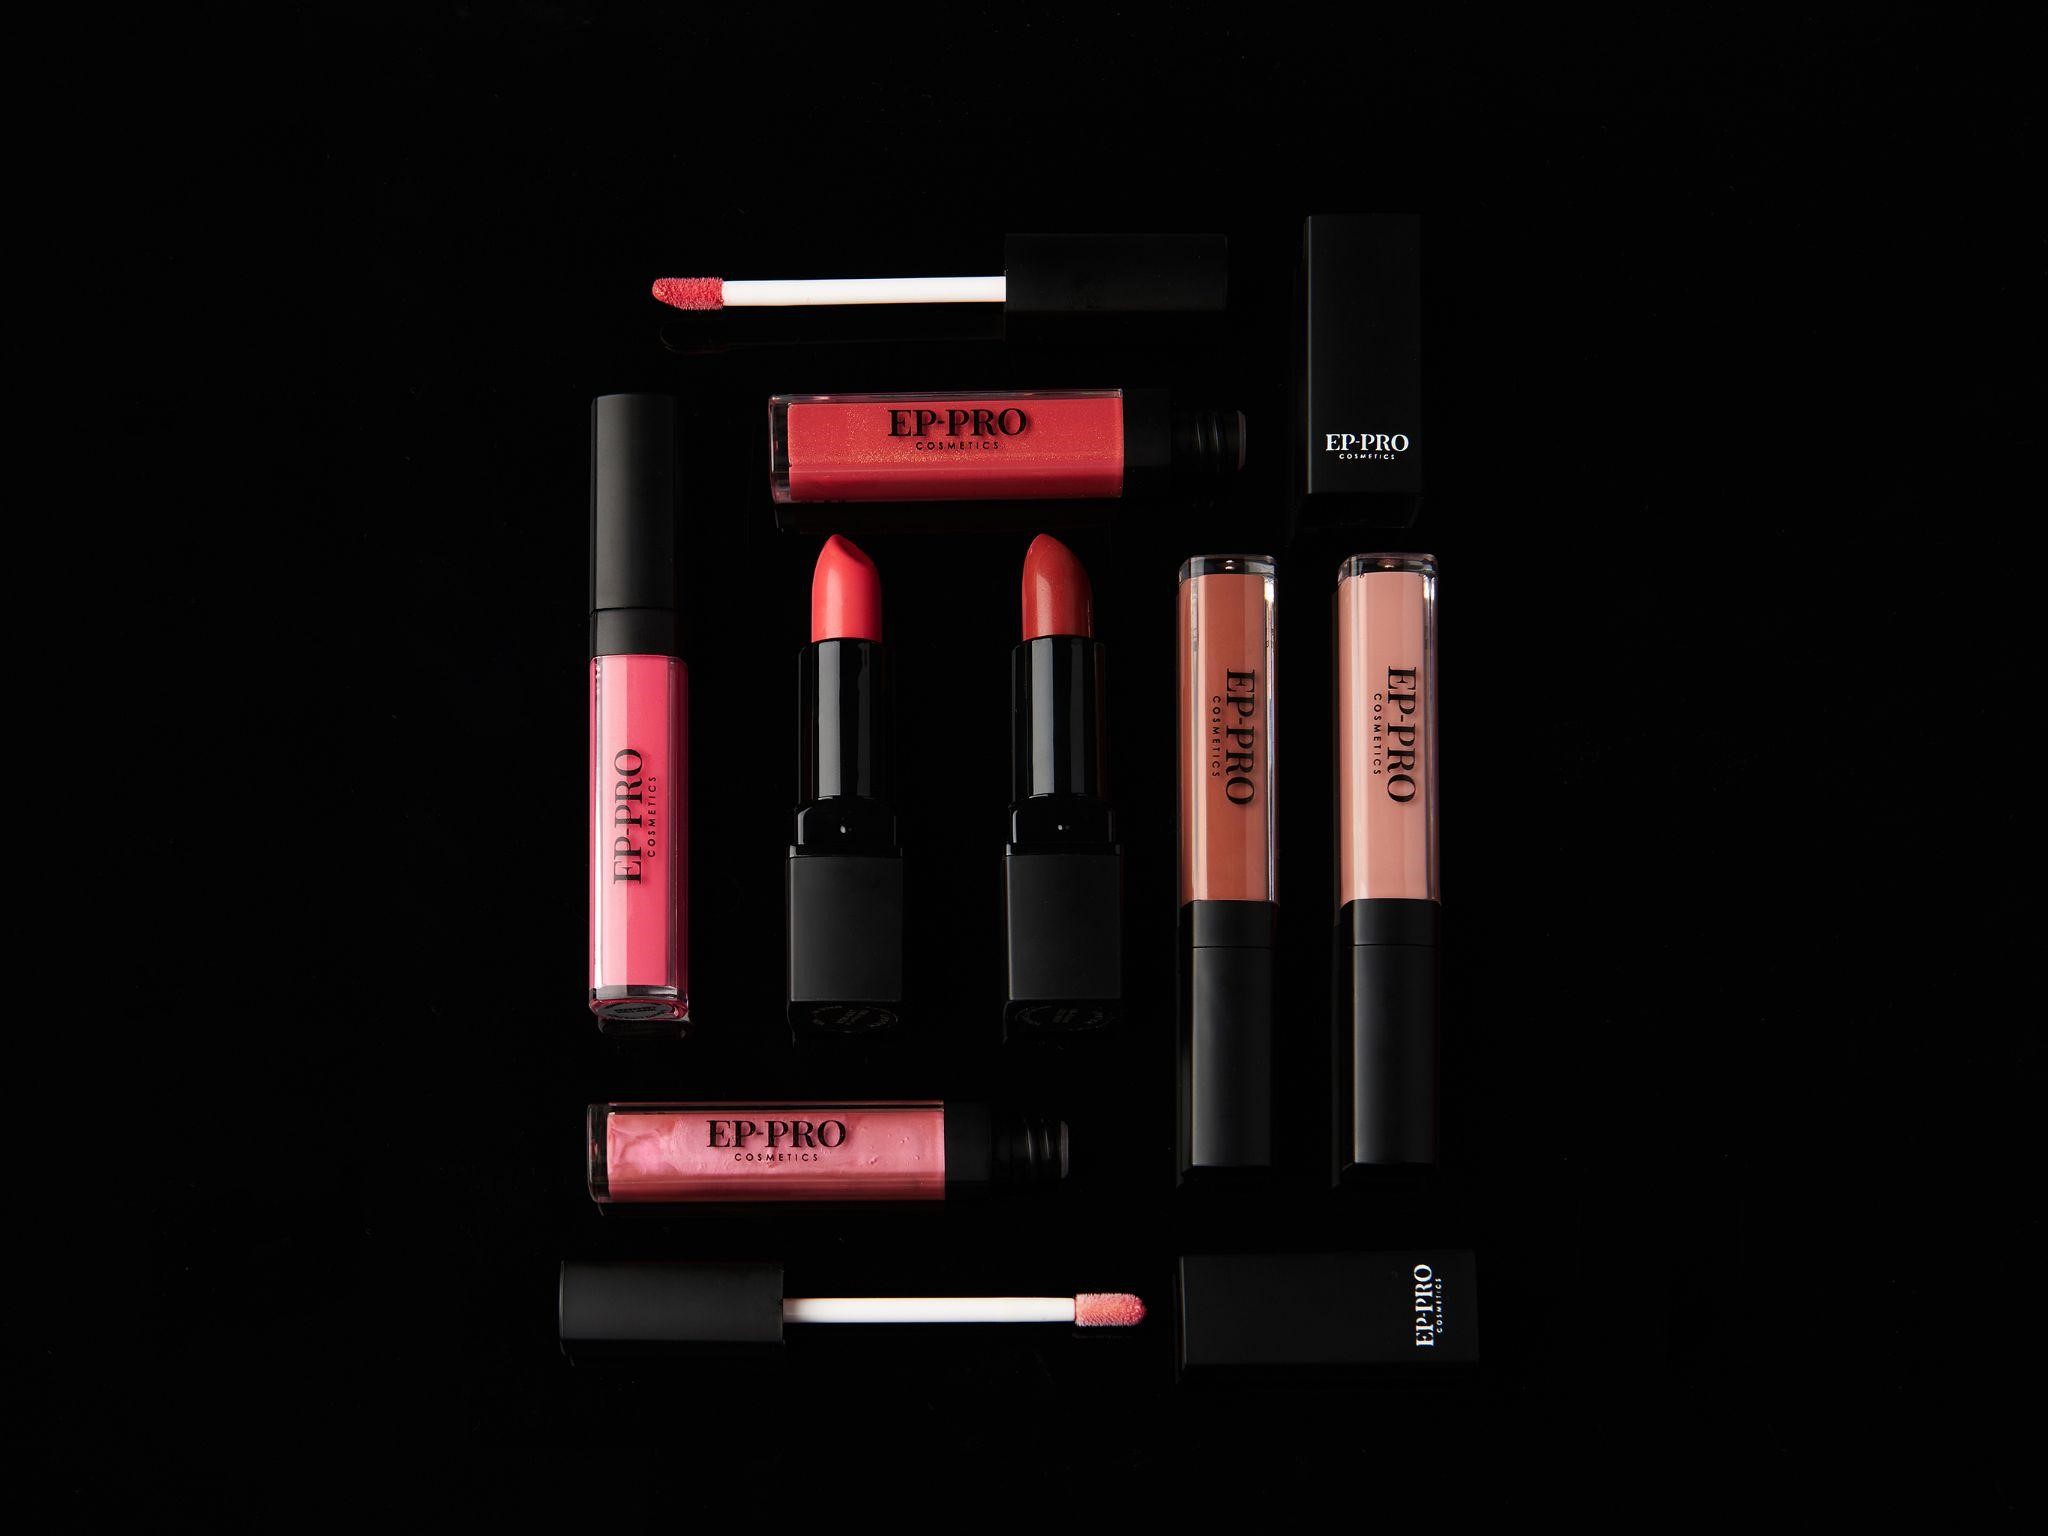 Ep-Pro Cosmetics lipsticks